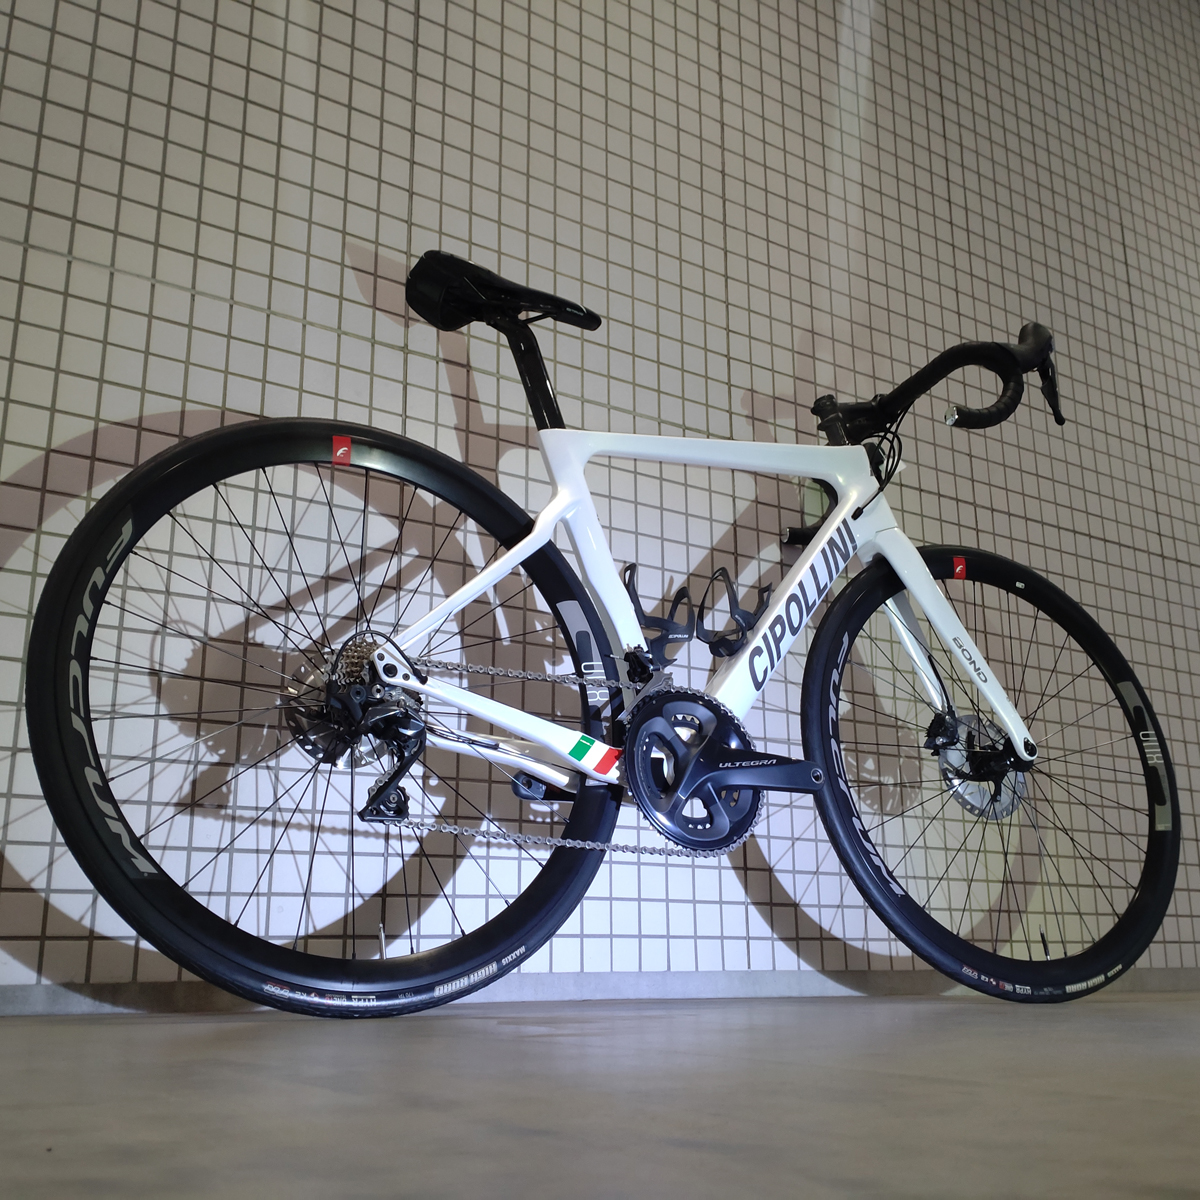 CIPOLLINI】再投稿 試乗車放出第一弾 BOND2 Mサイズ | 川崎で自転車を 